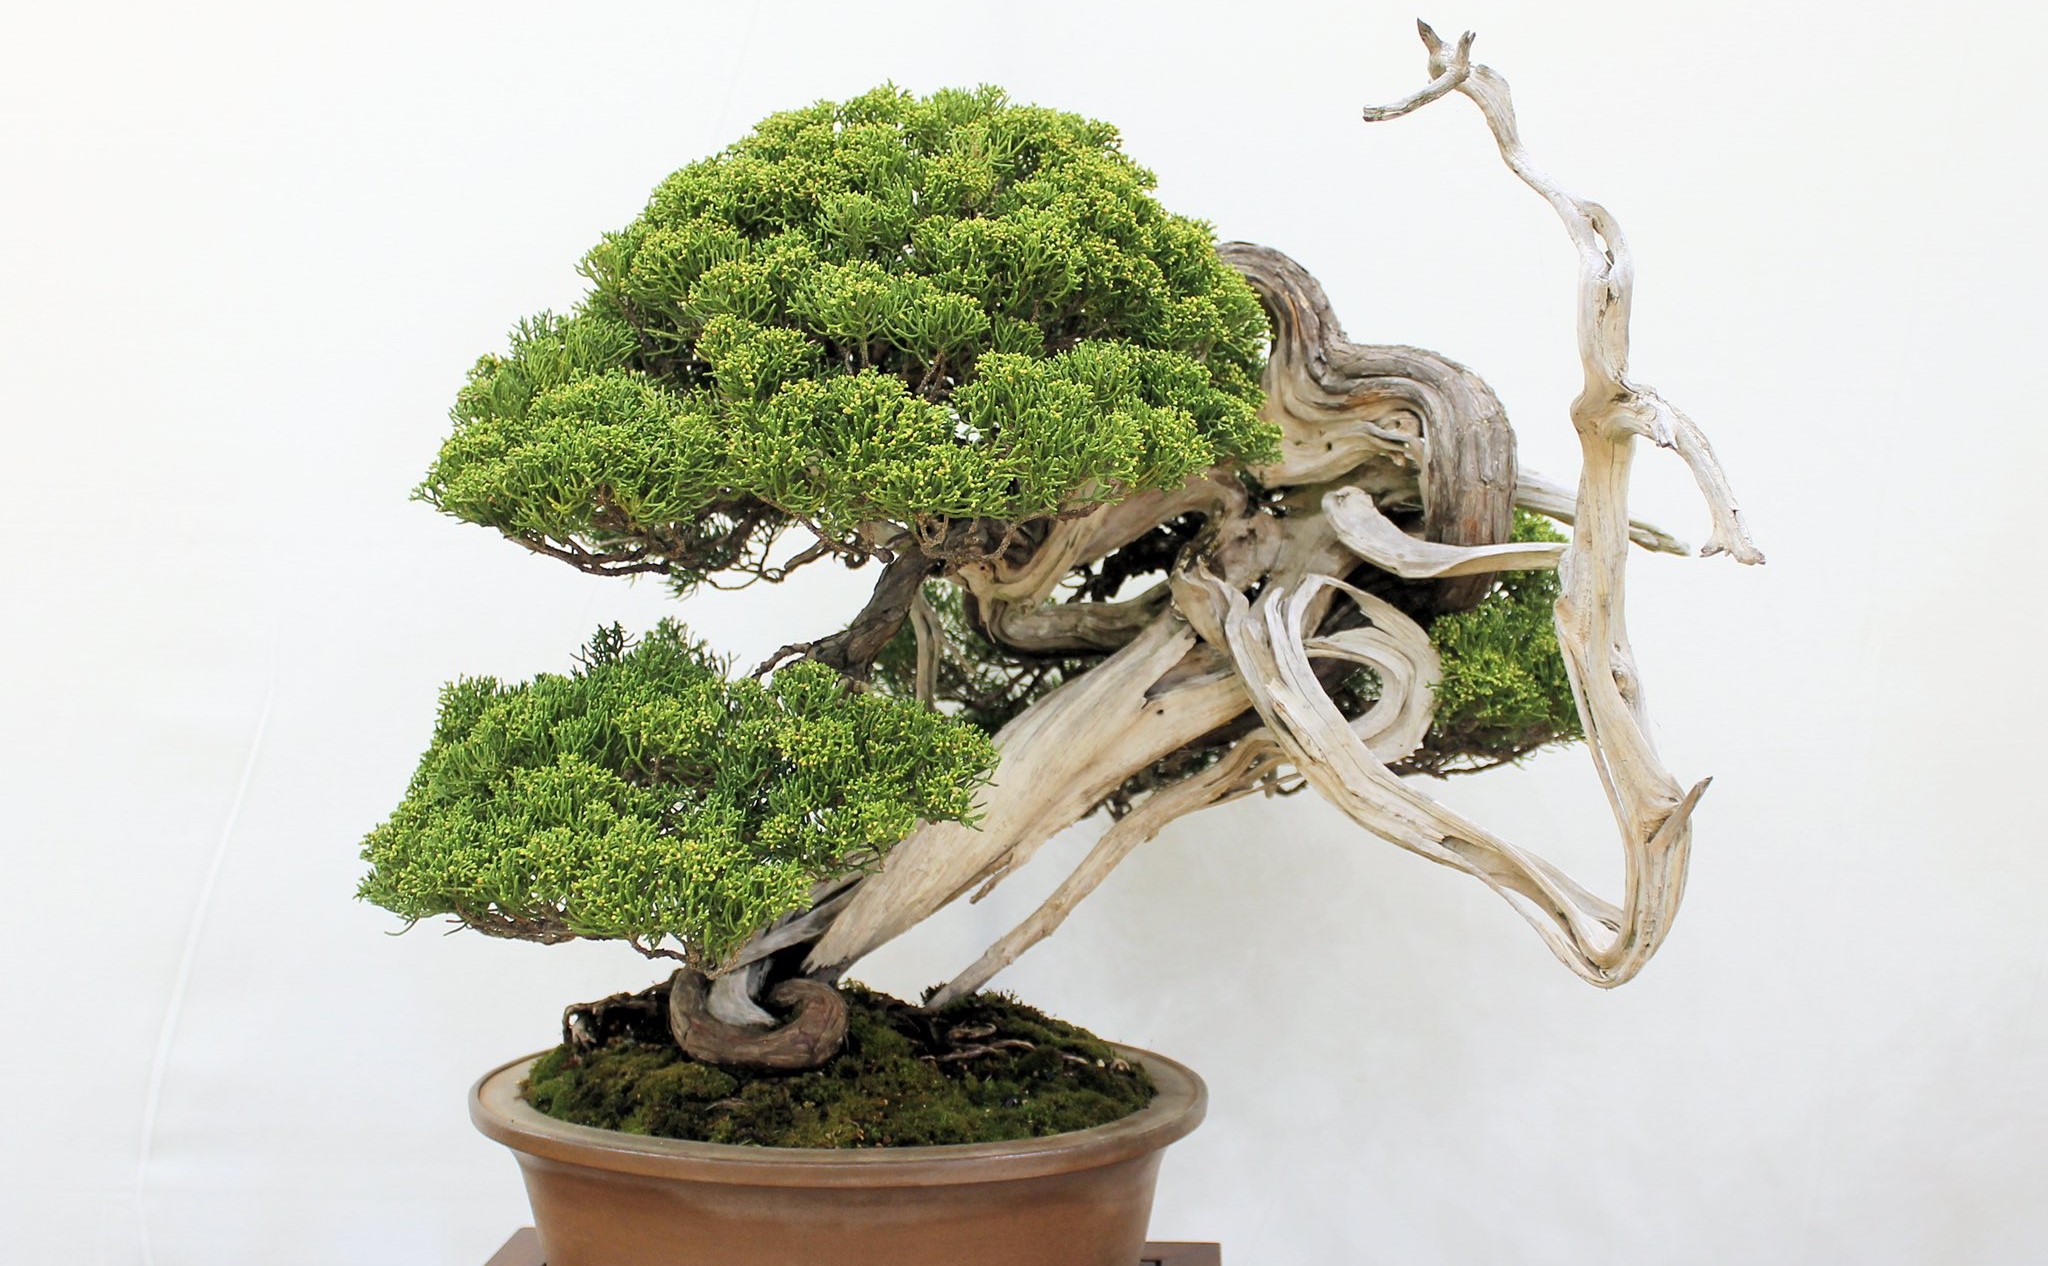 How long can a bonsai tree survive?